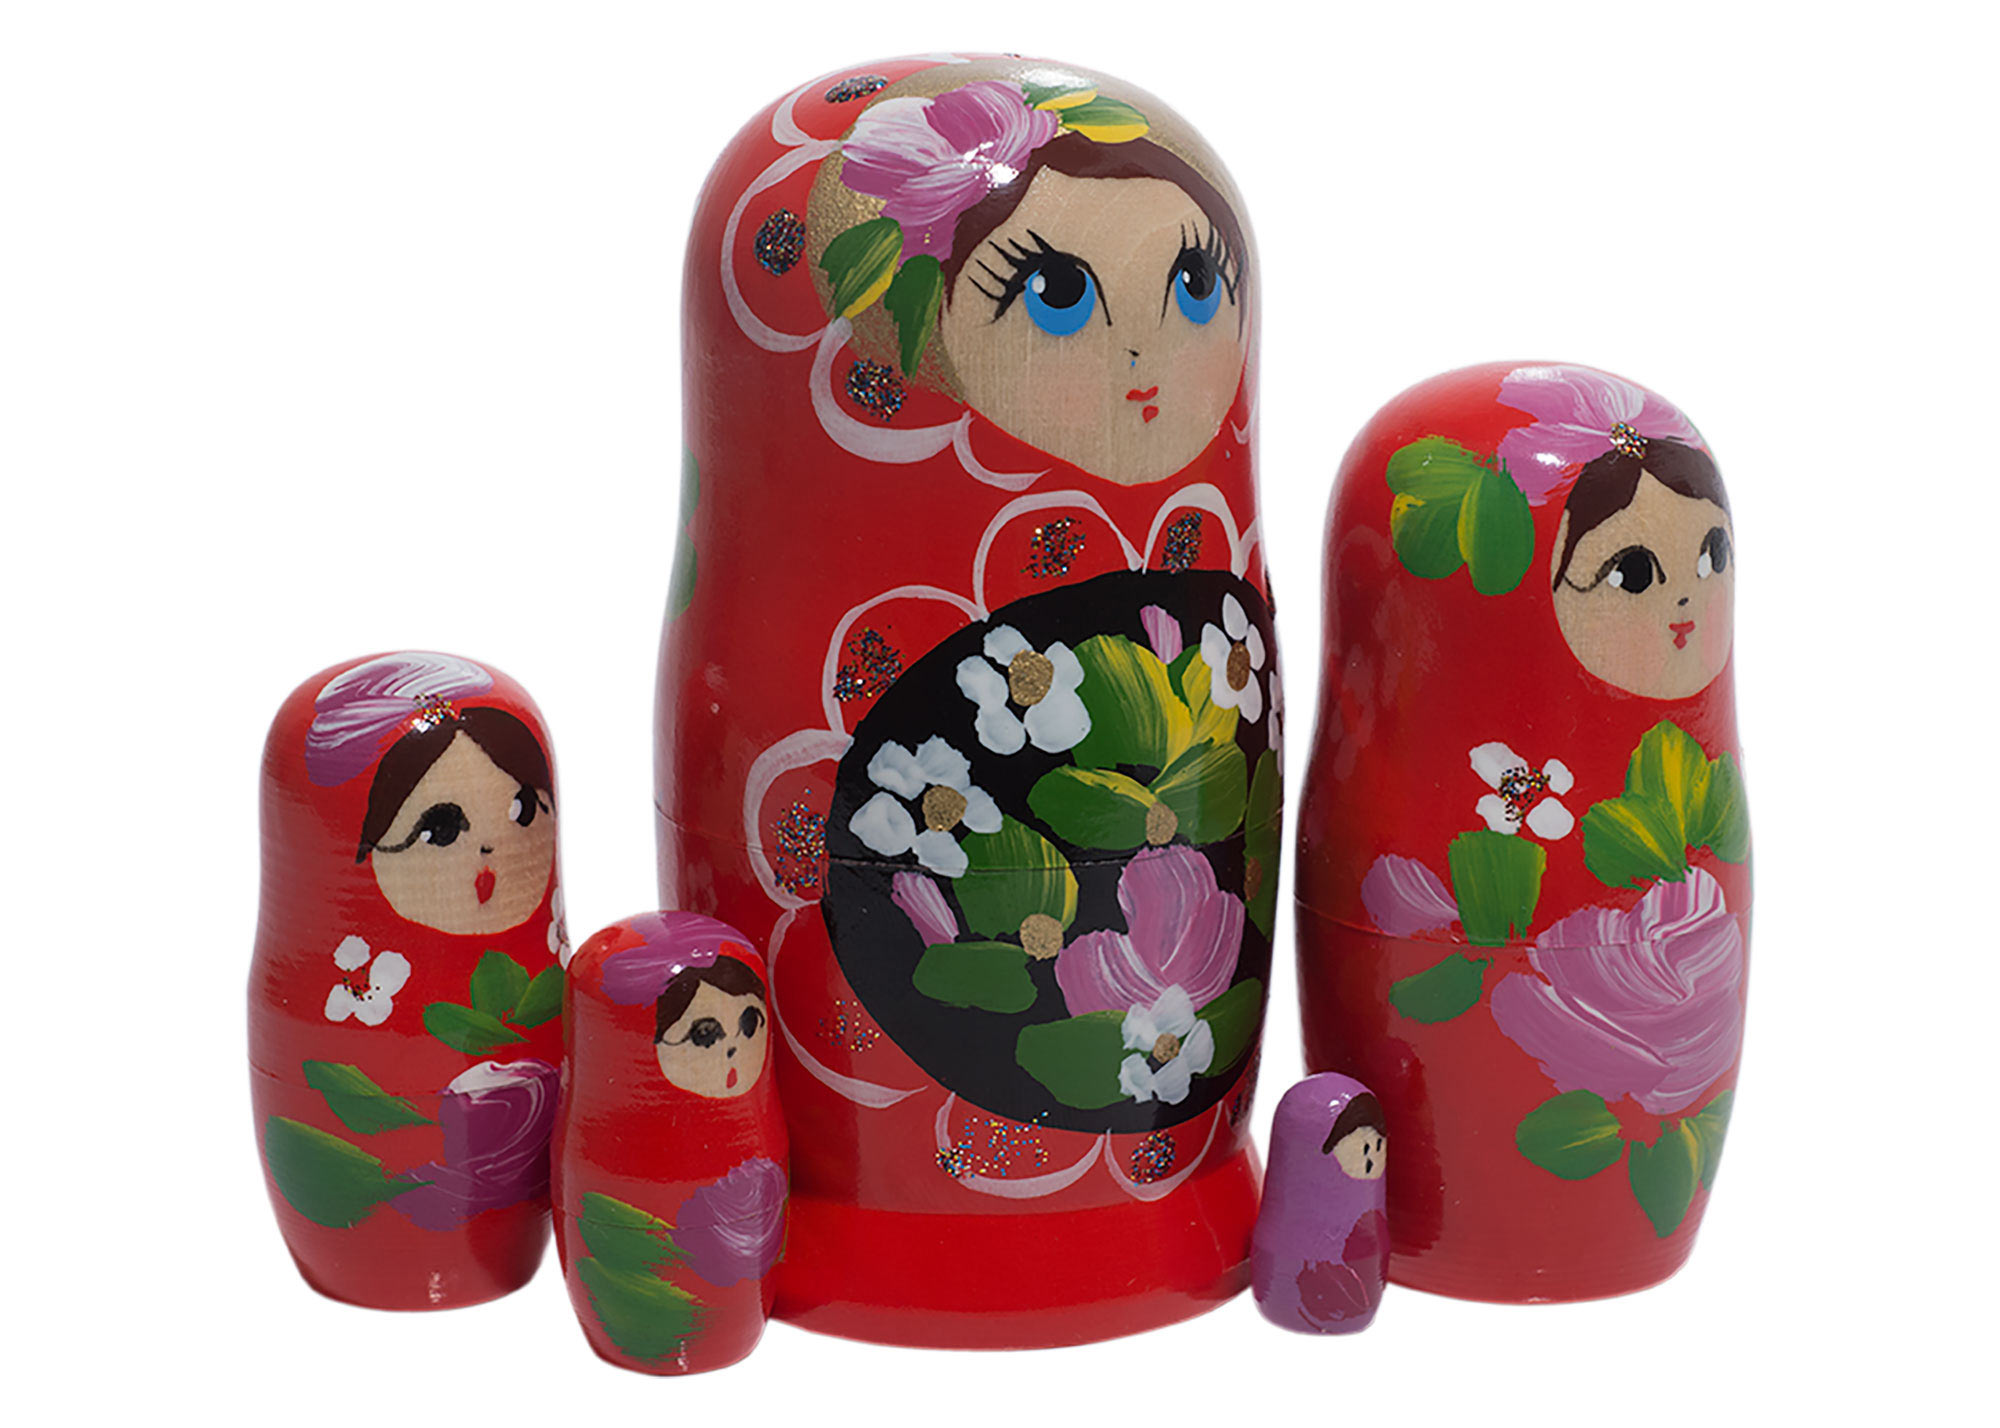 Buy Red Art Babooshka Doll 5pc./4" at GoldenCockerel.com